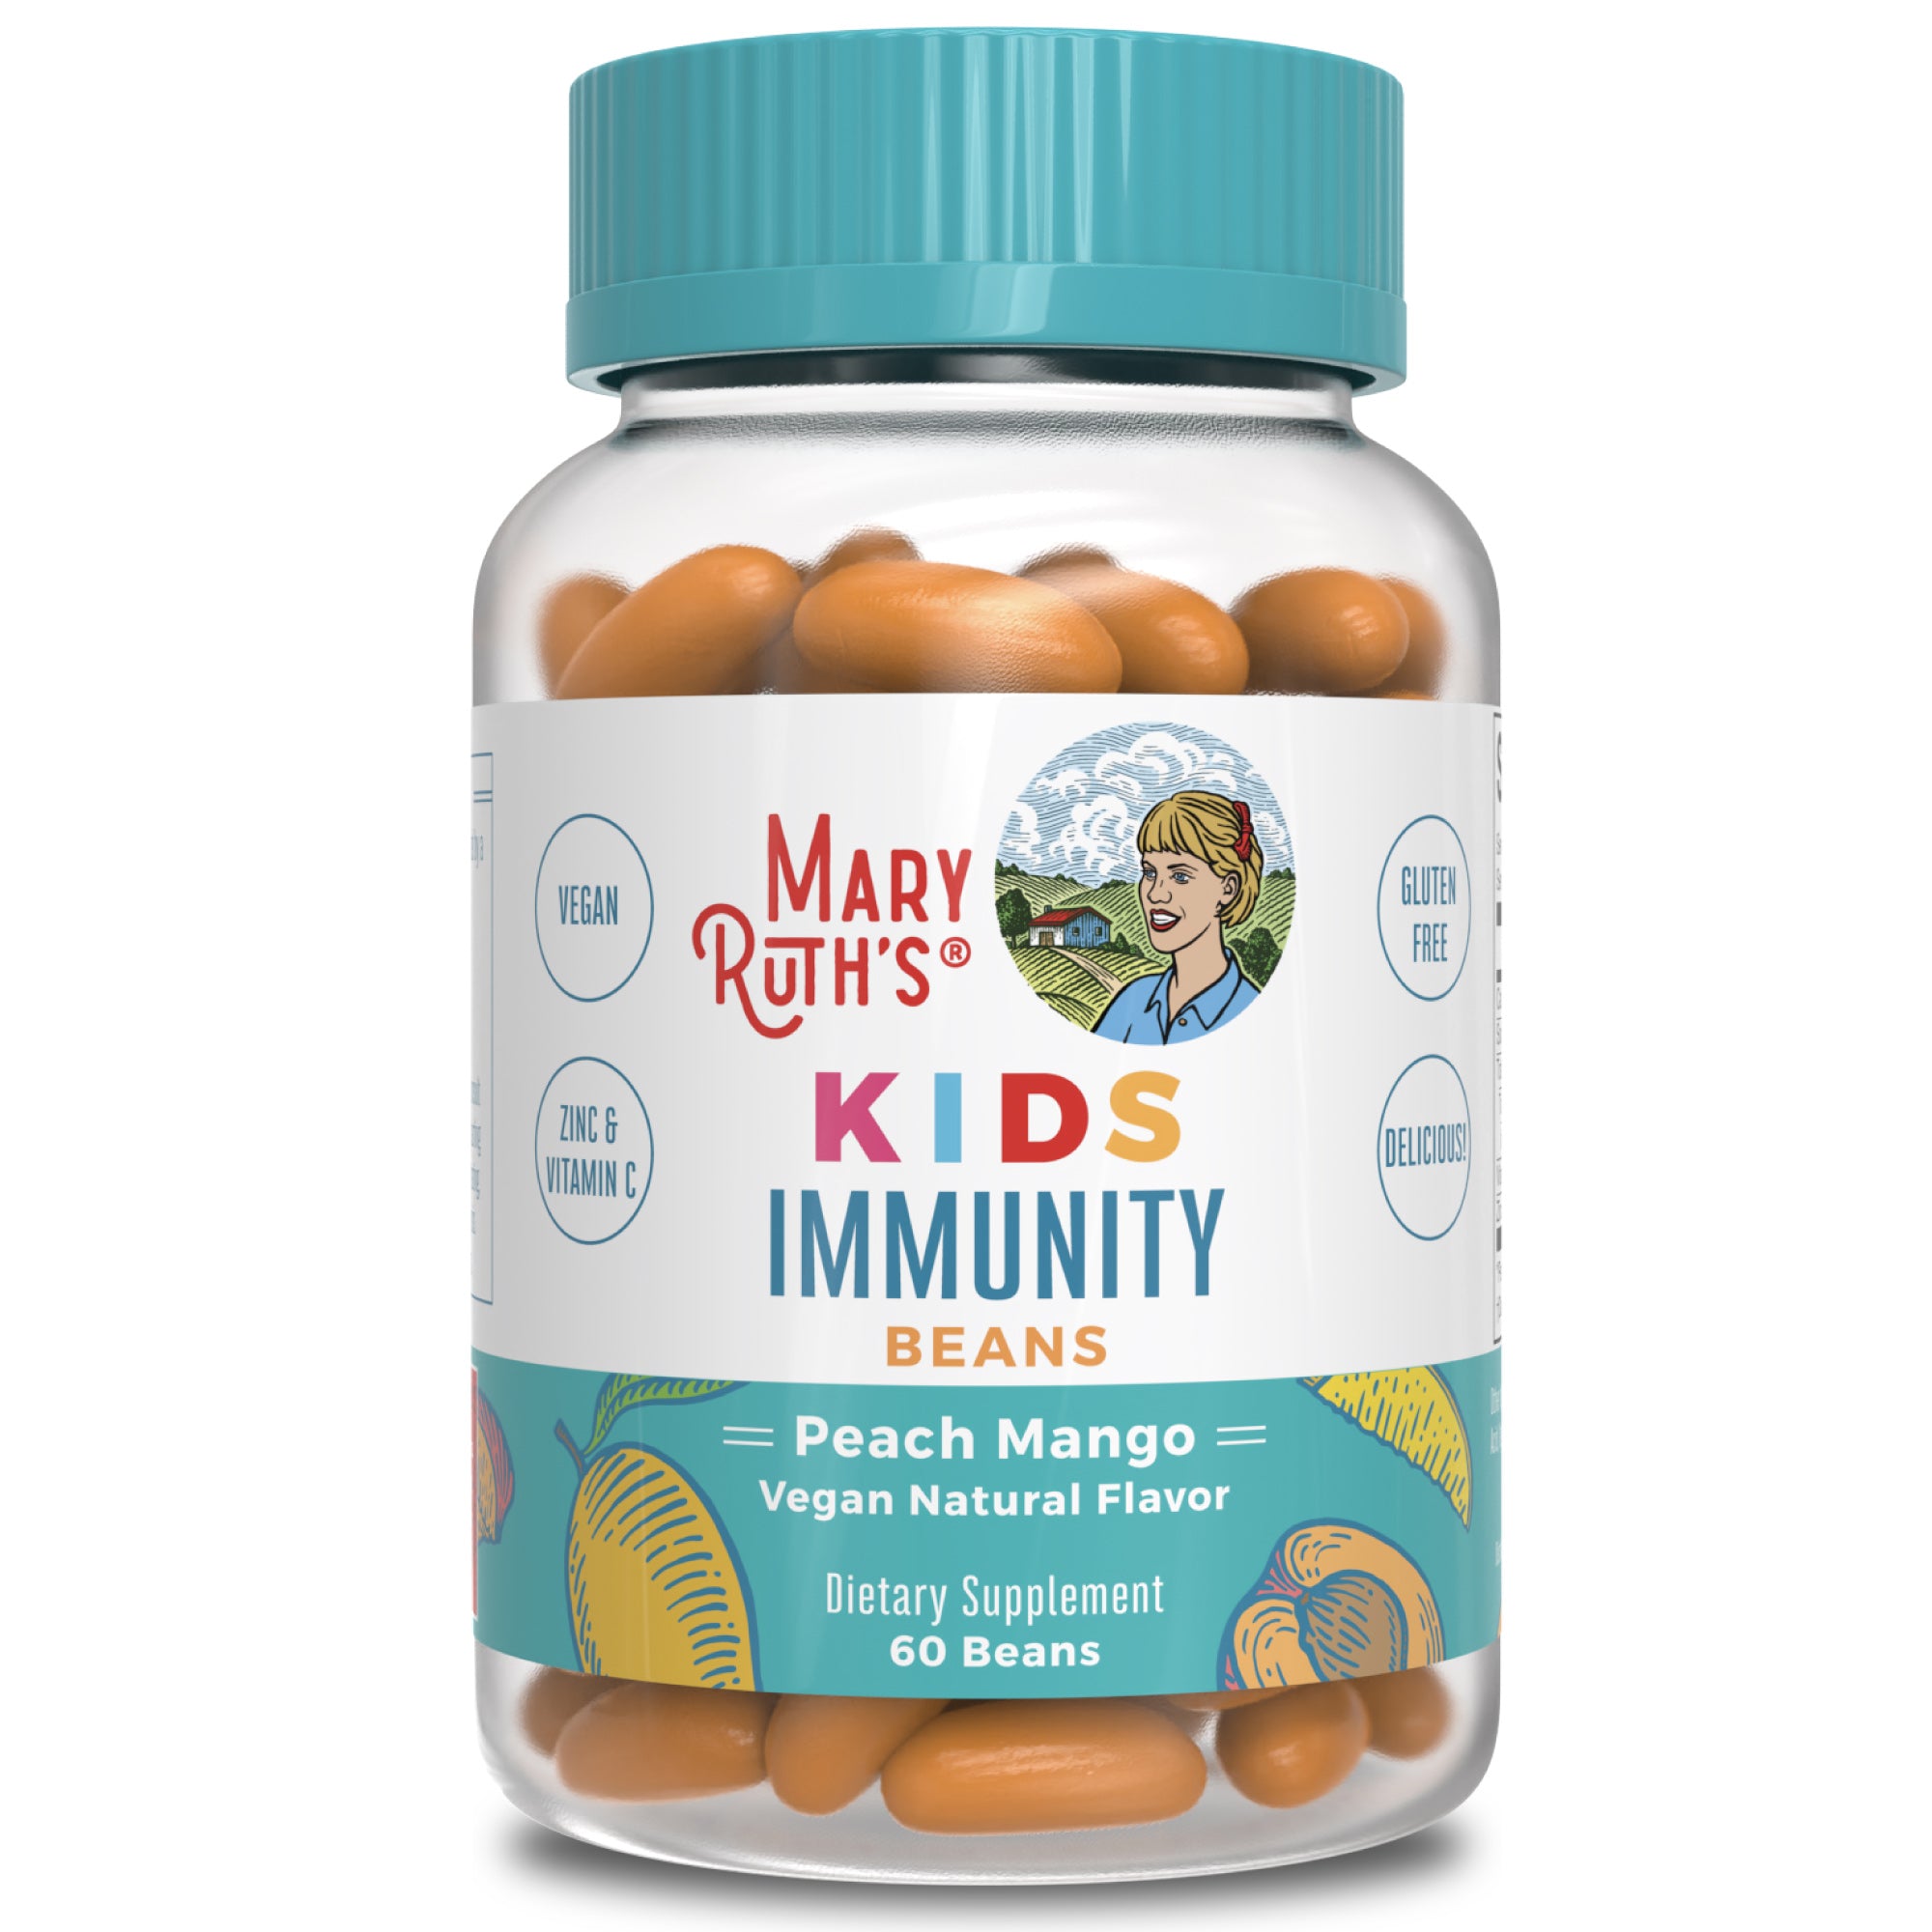 Kids Immunity Beans